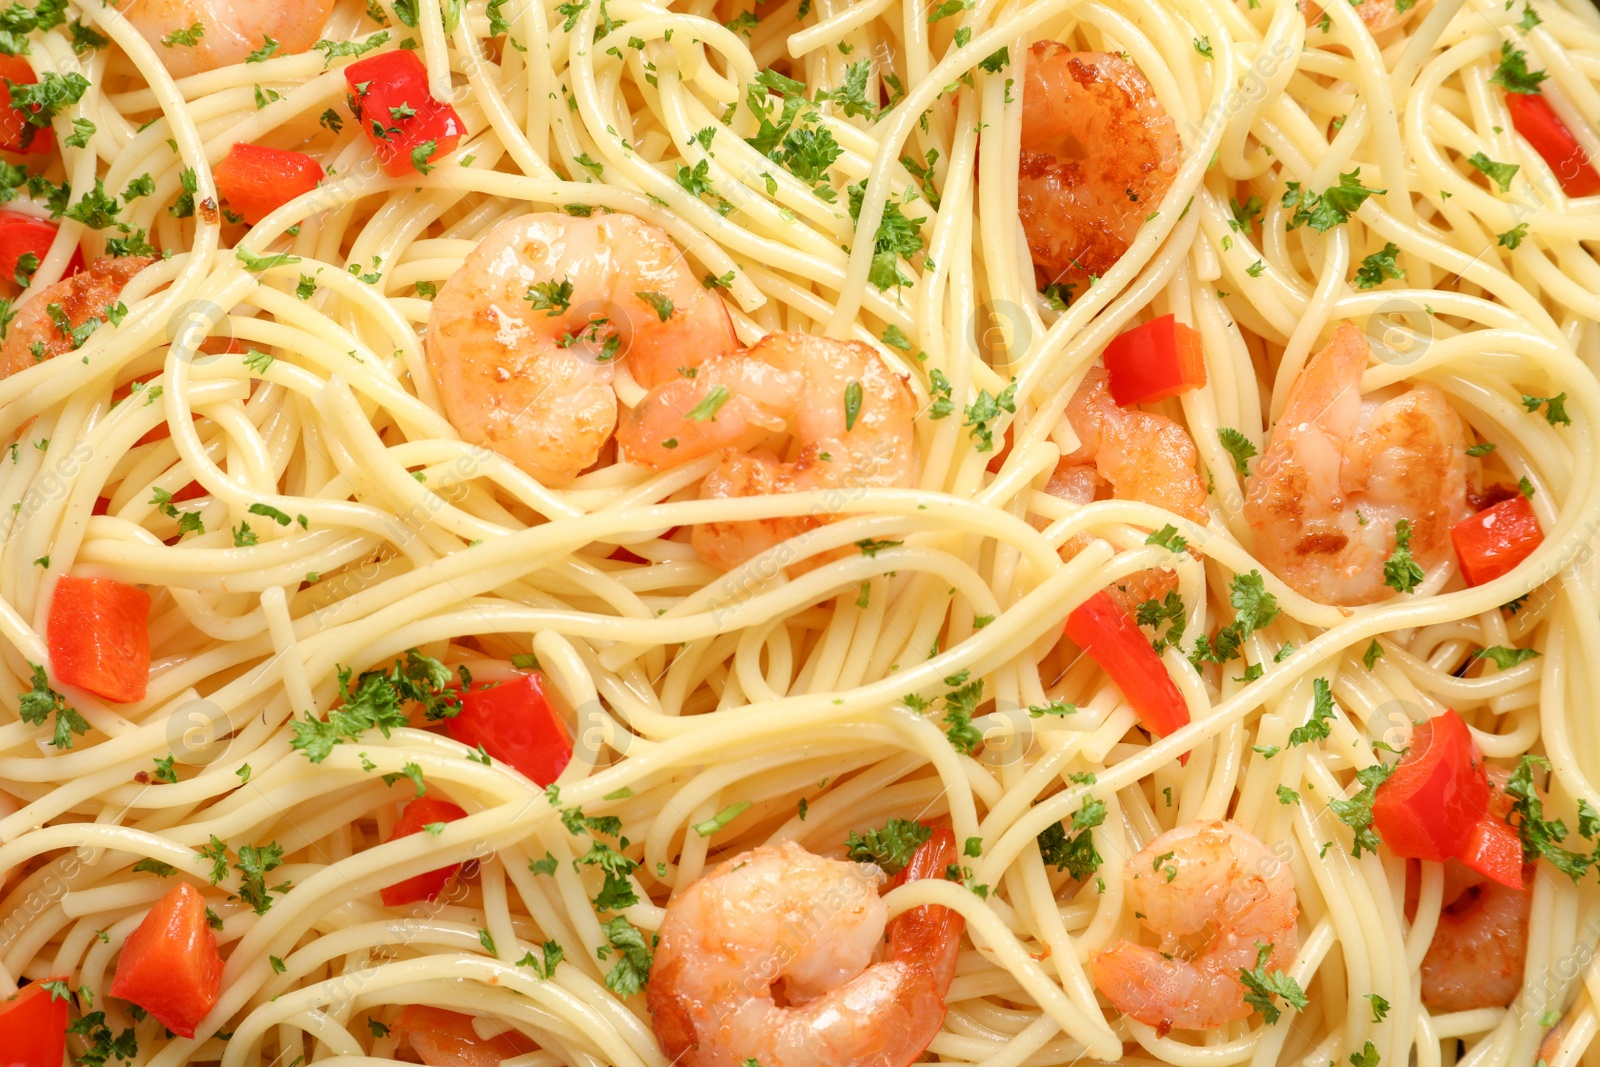 Photo of Delicious spaghetti with shrimps, closeup